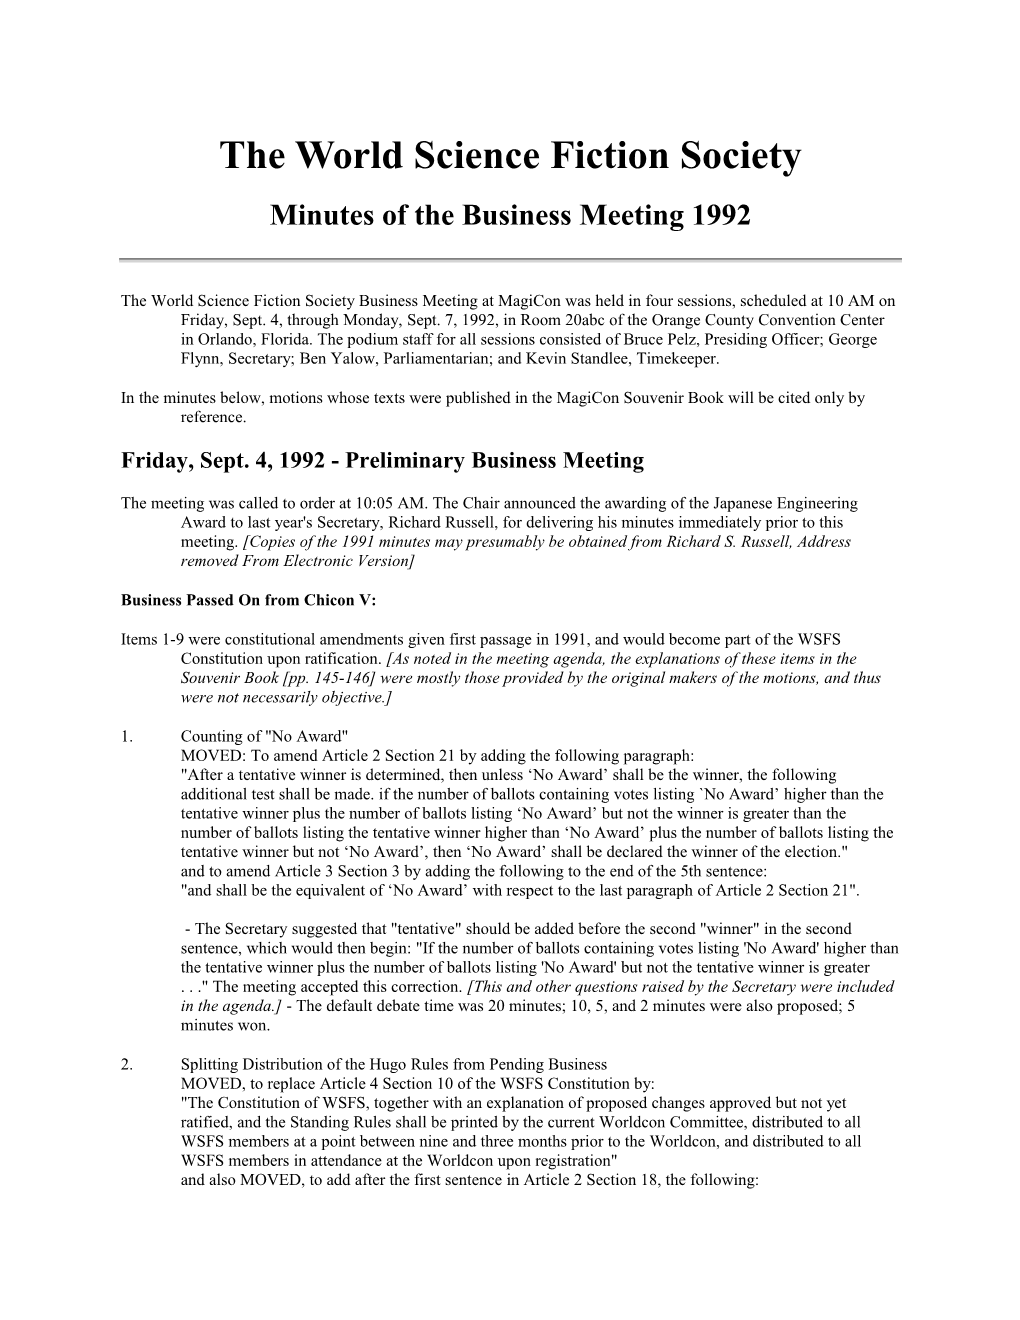 The World Science Fiction Society - 1992 Minutes